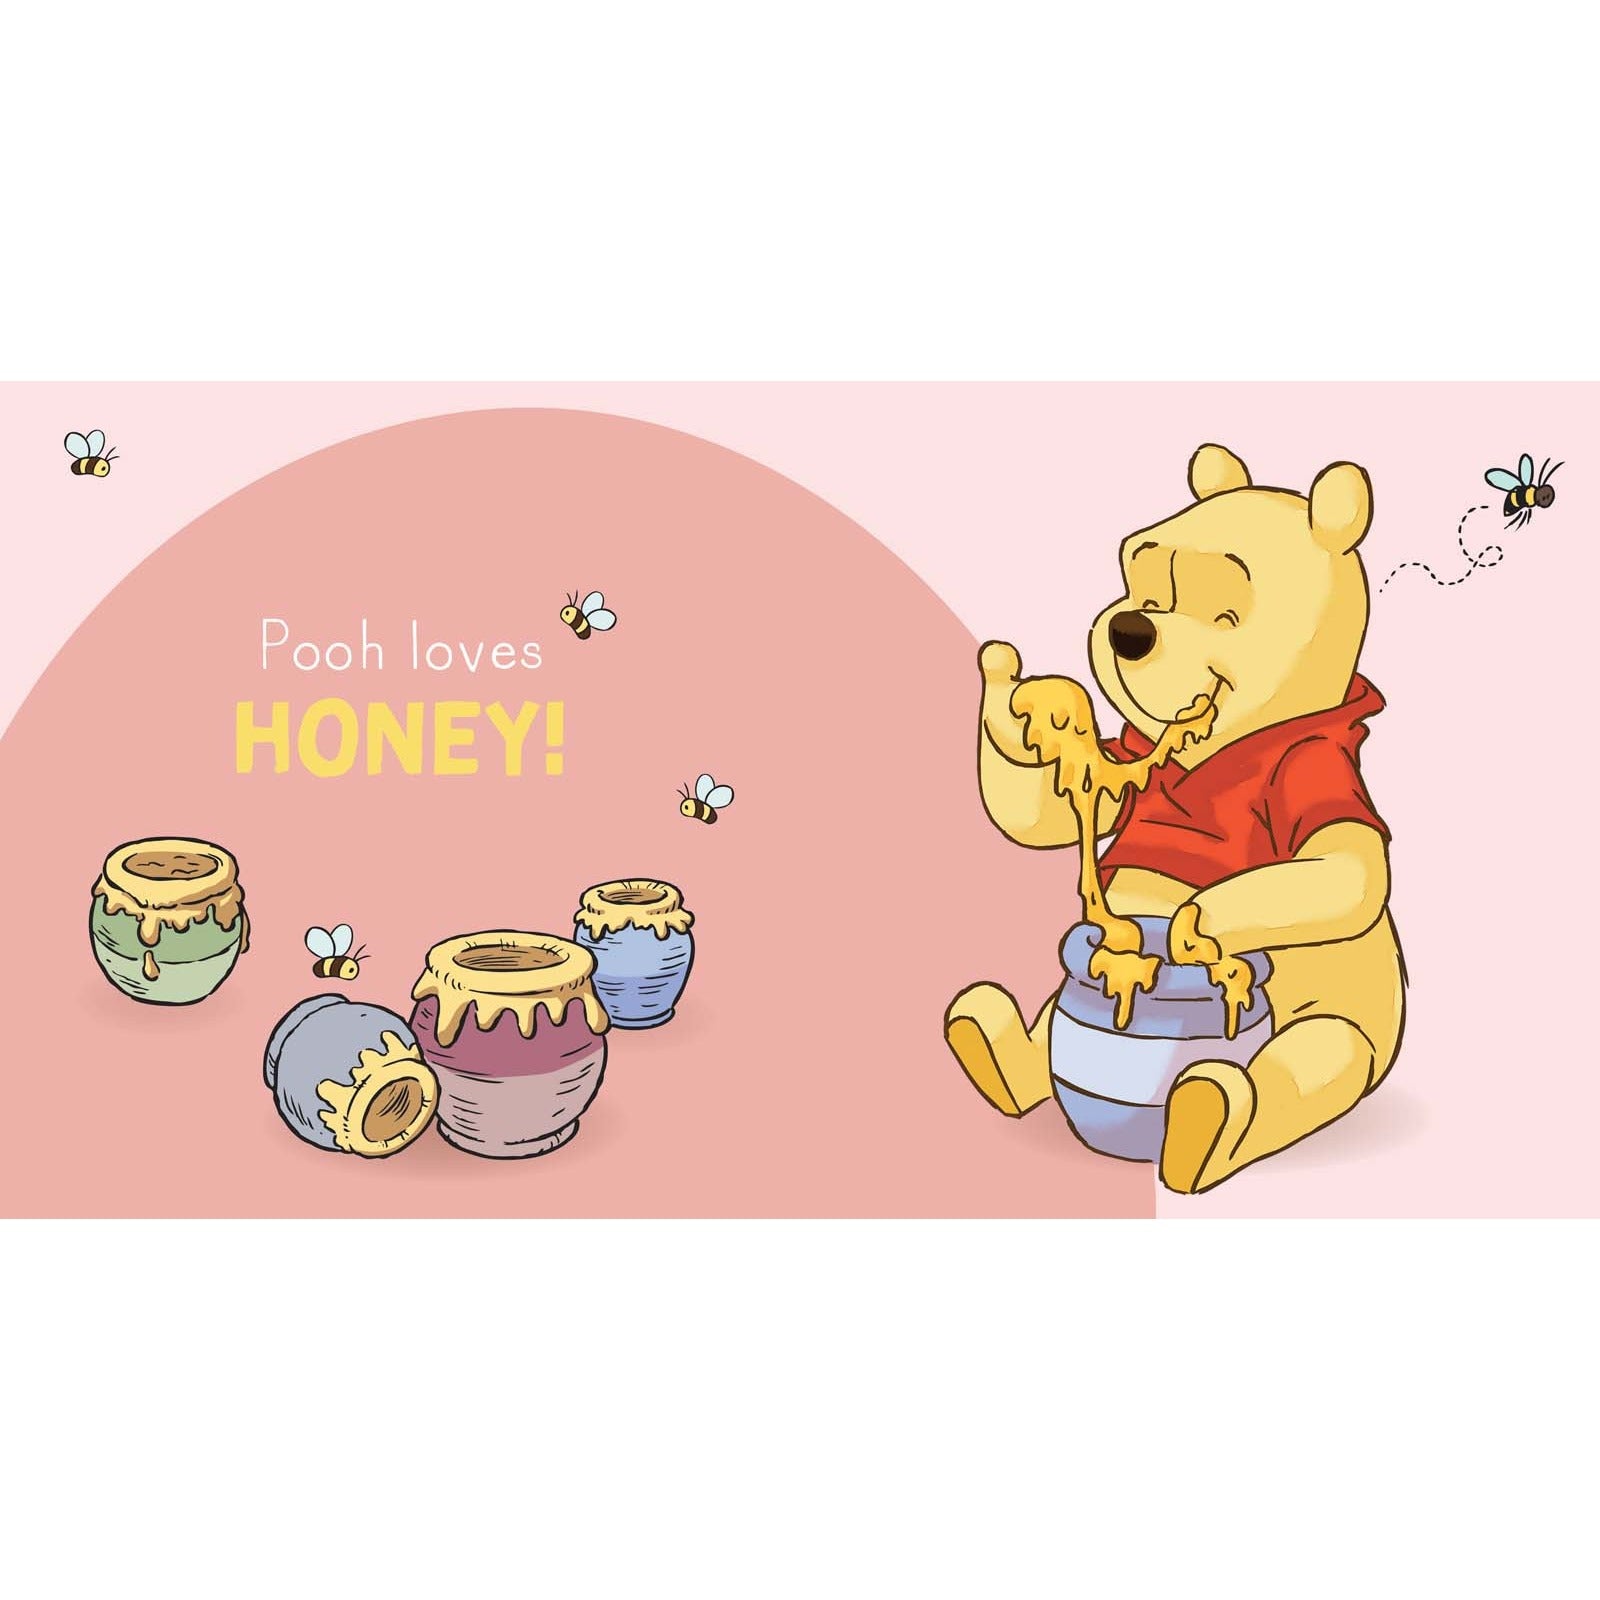 Disney 100 Meet Winnie the Pooh available at Bear & Moo